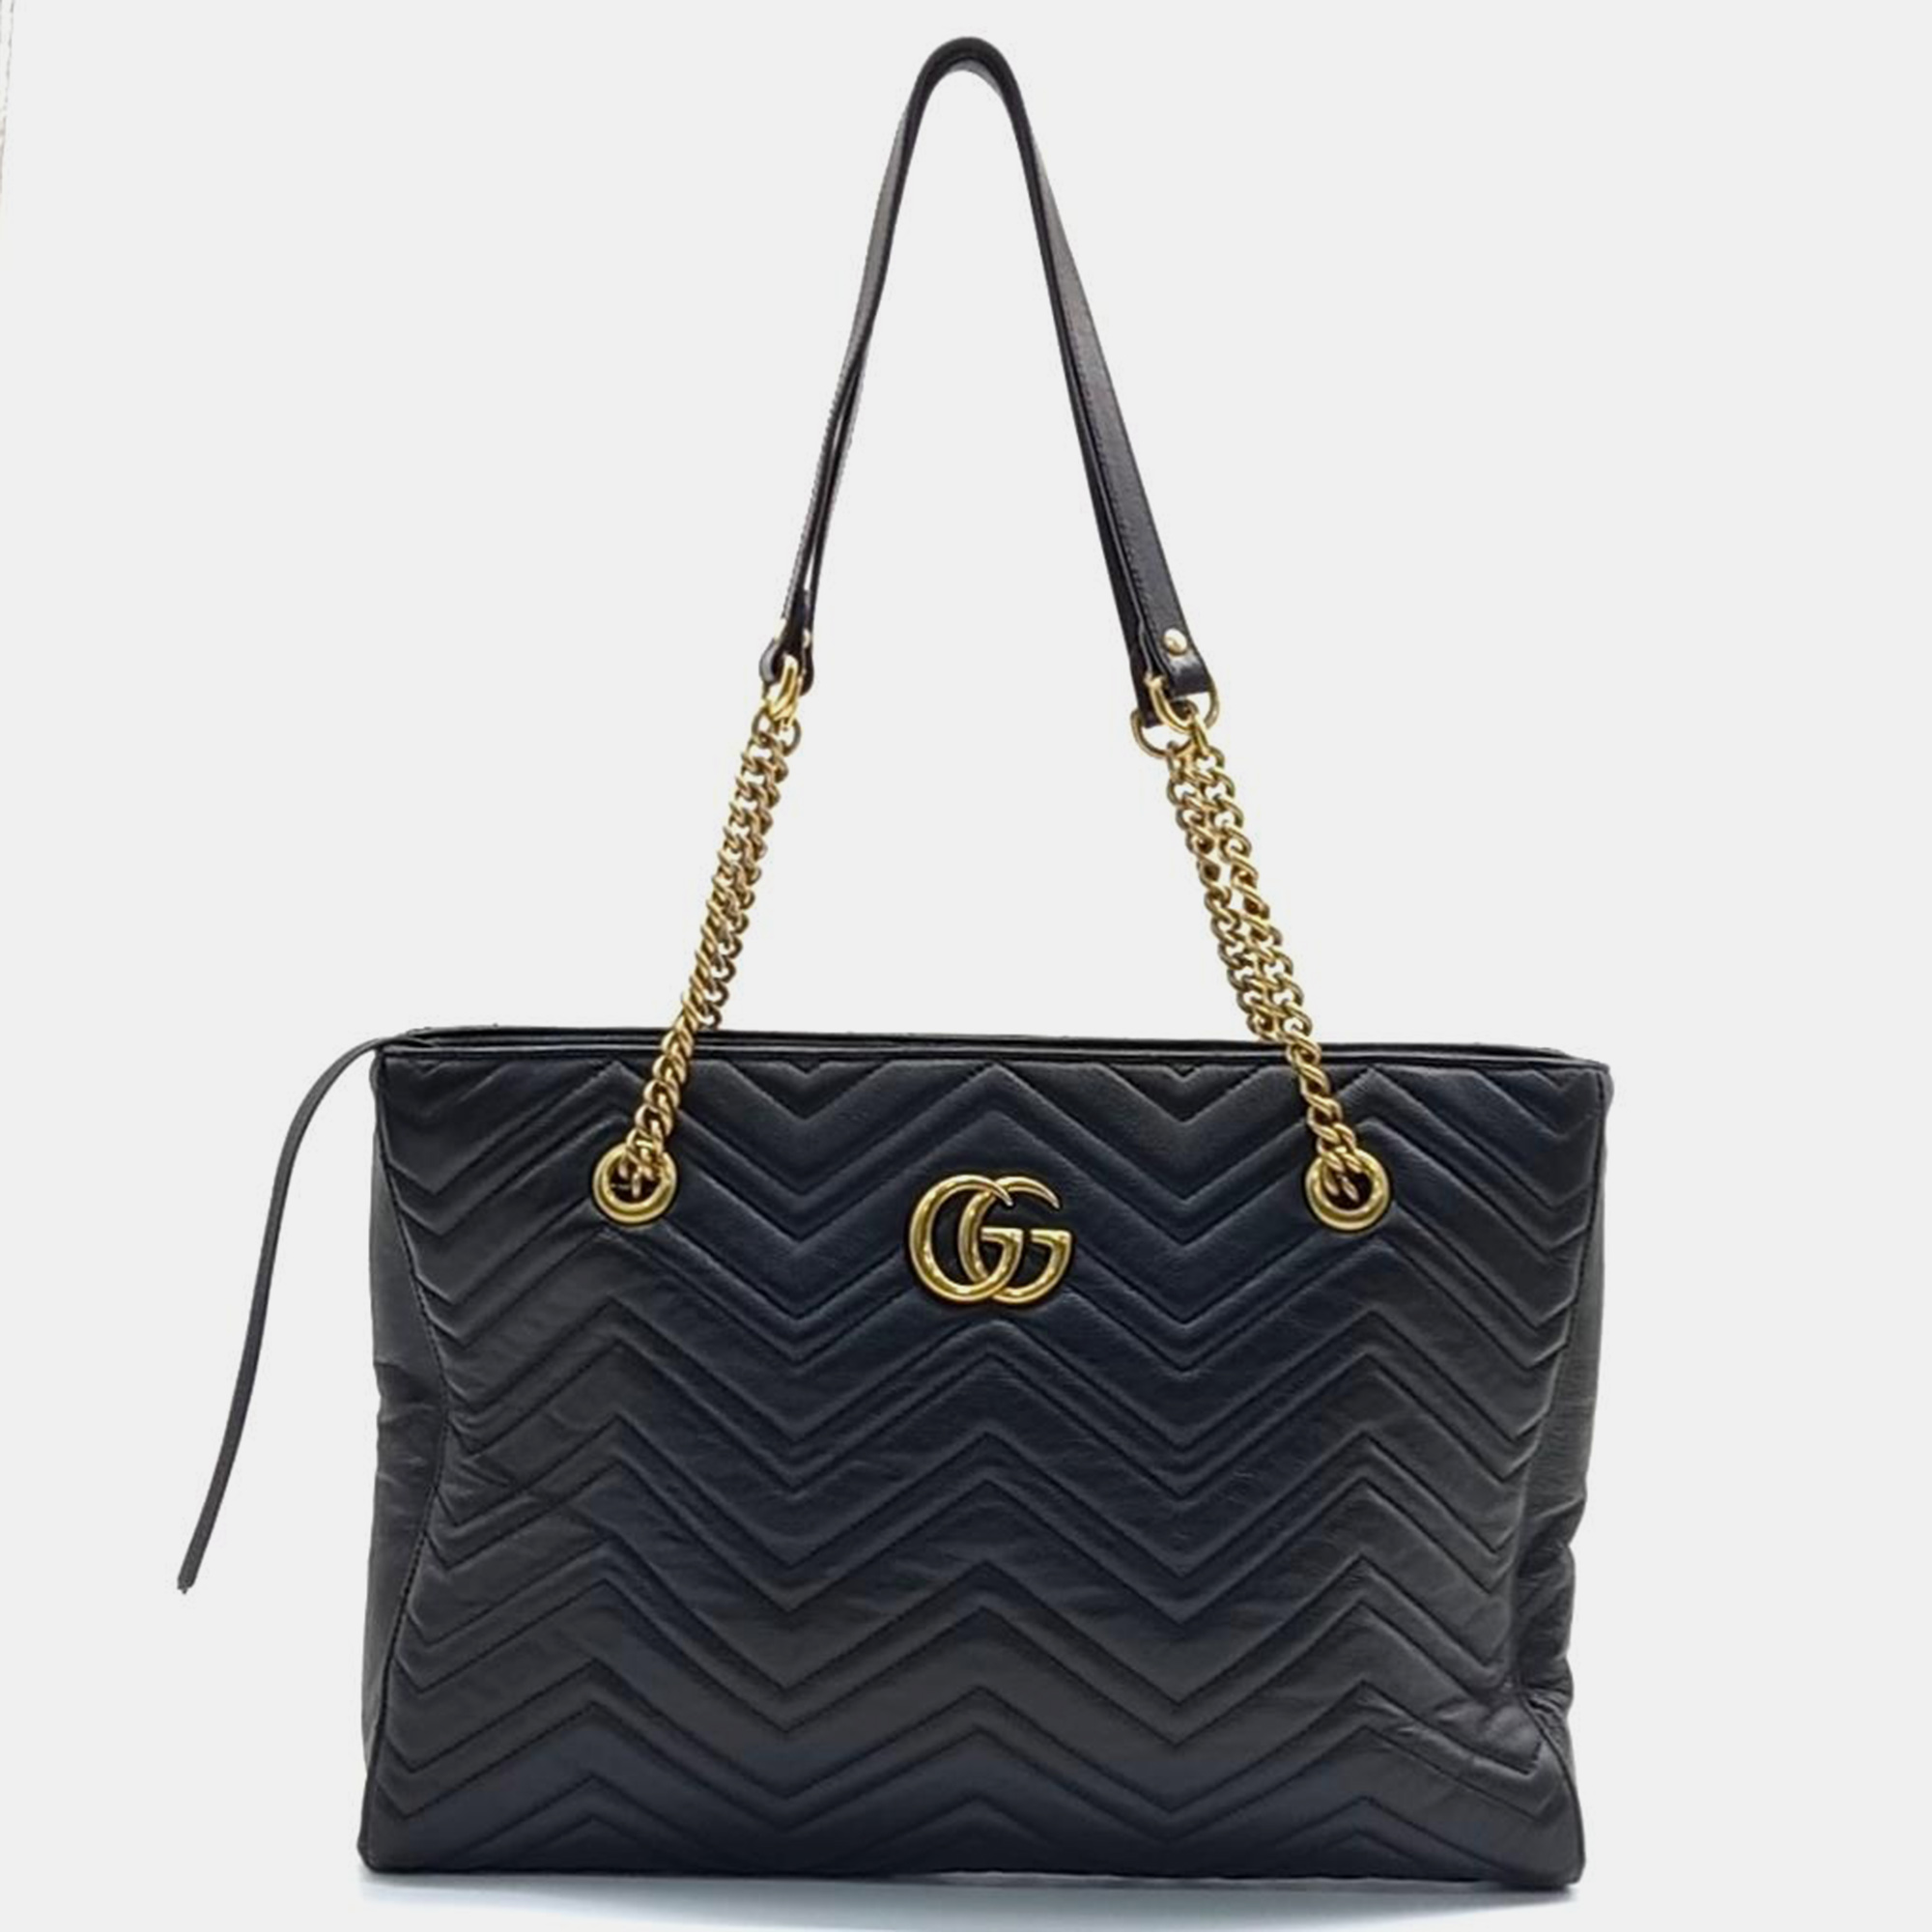 Gucci black leather medium gg marmont tote bag